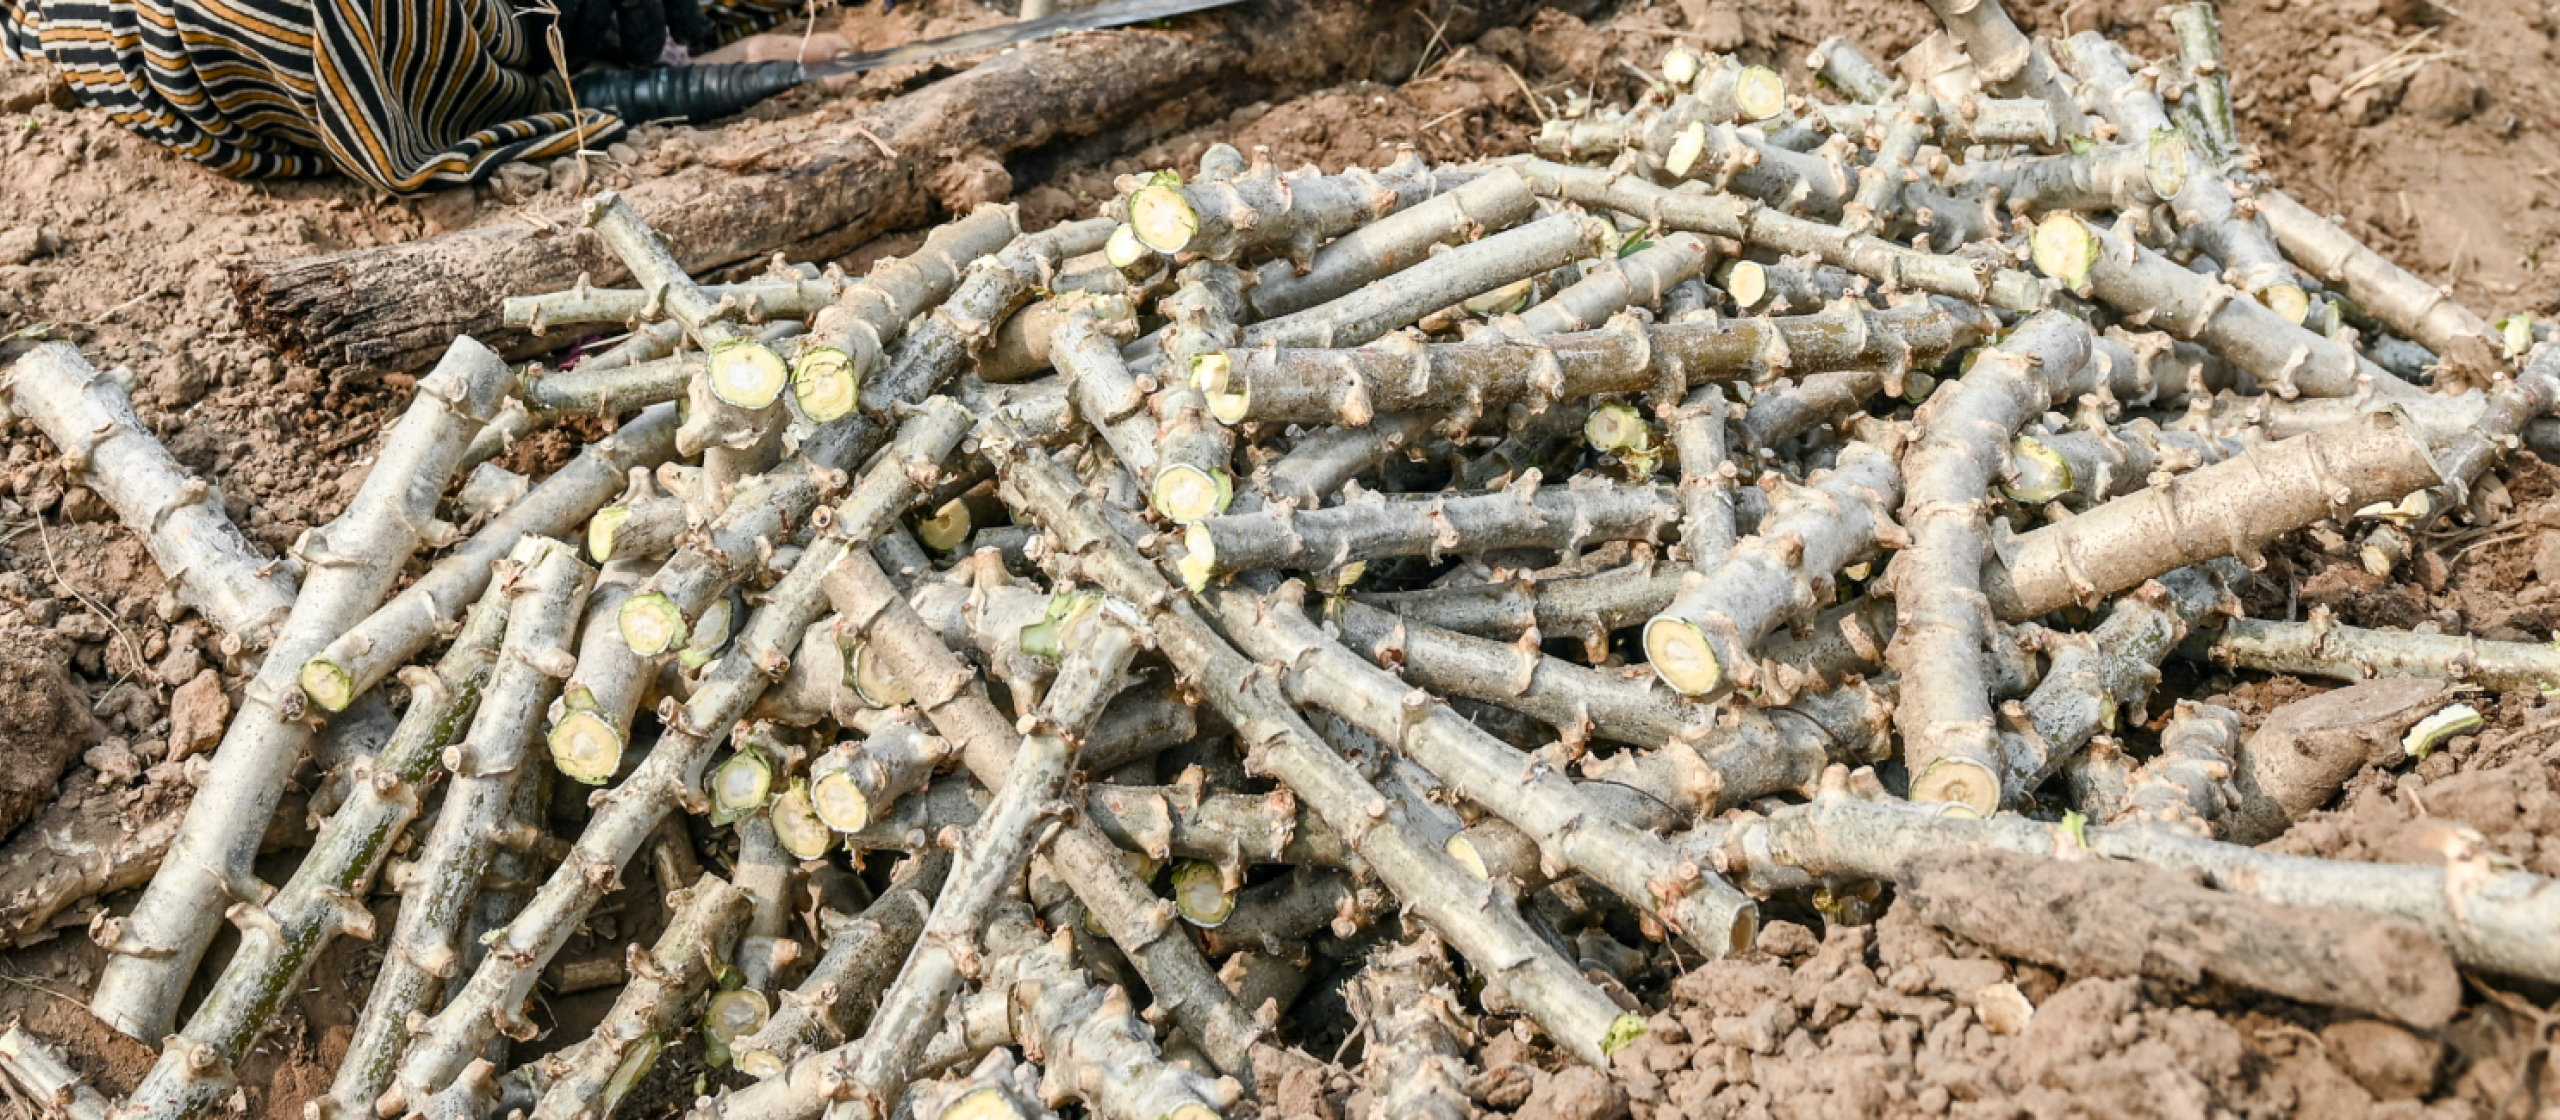 Freshly harvested cassava crop